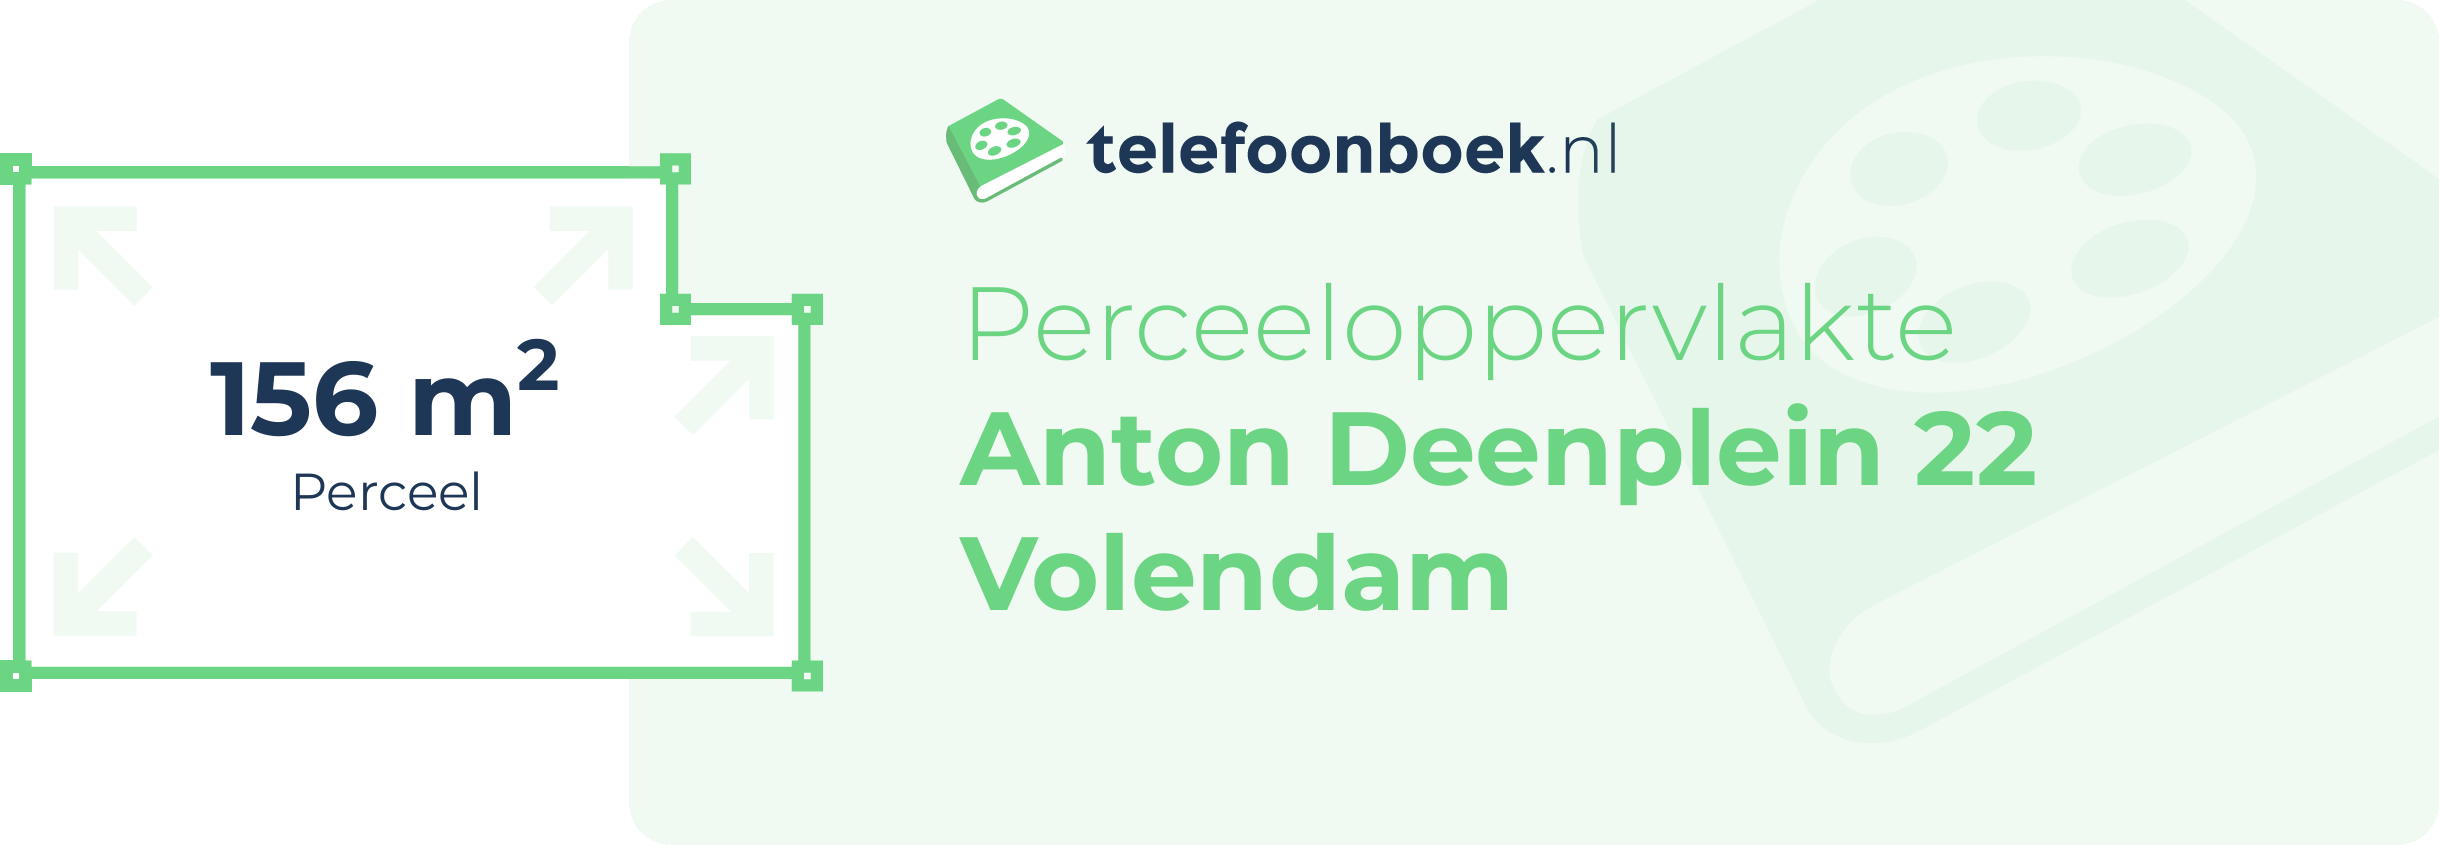 Perceeloppervlakte Anton Deenplein 22 Volendam